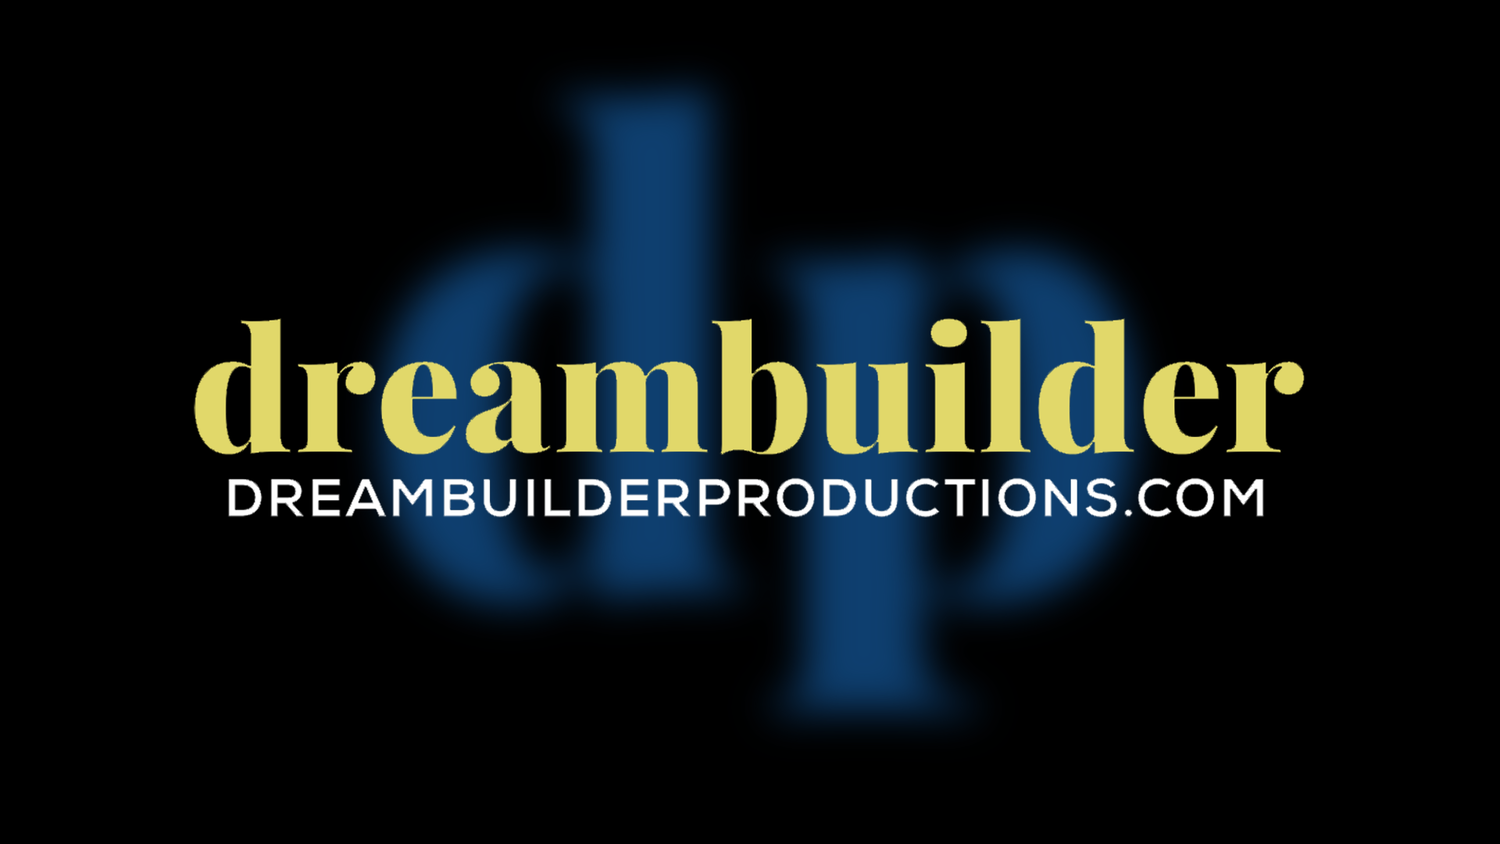 Dreambuilder Productions